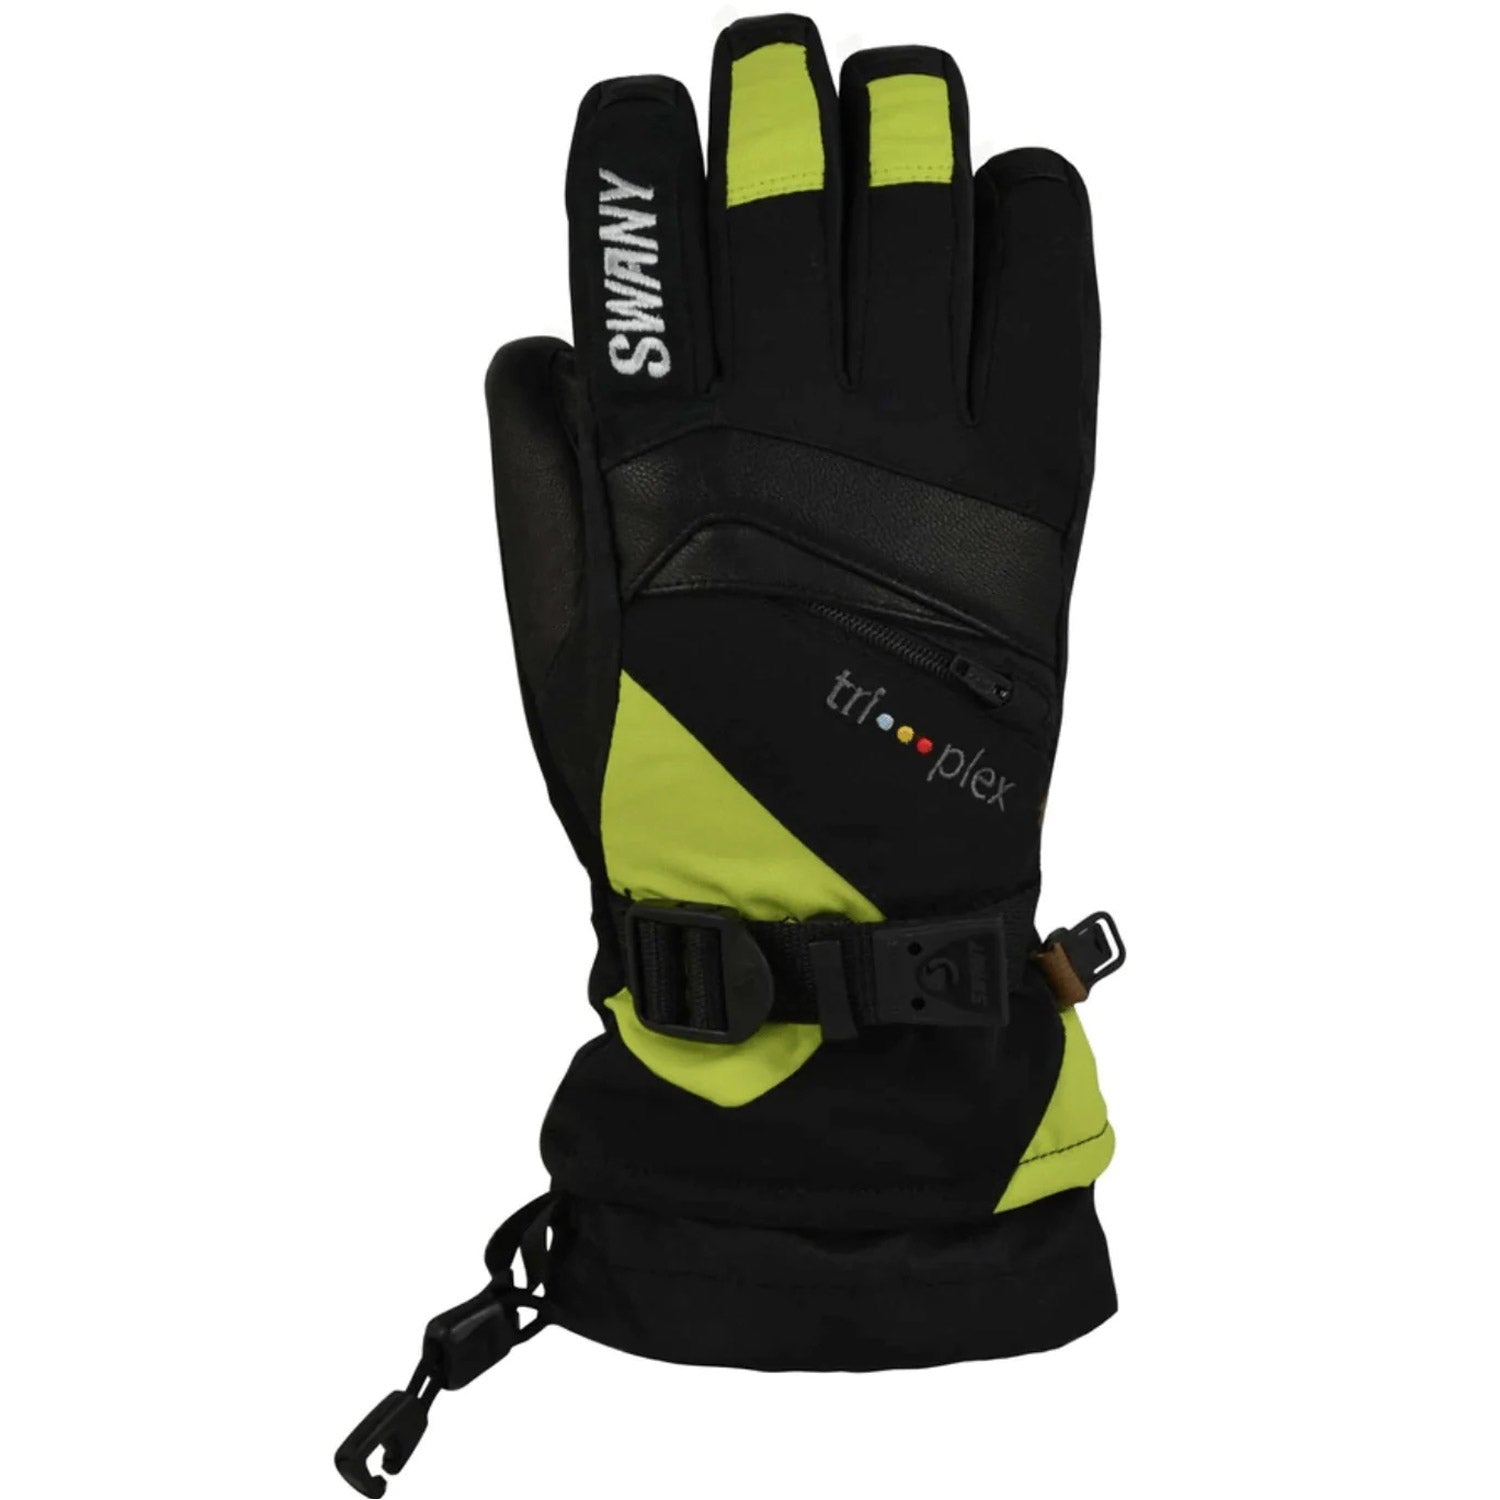 X-Change Junior Ski Glove